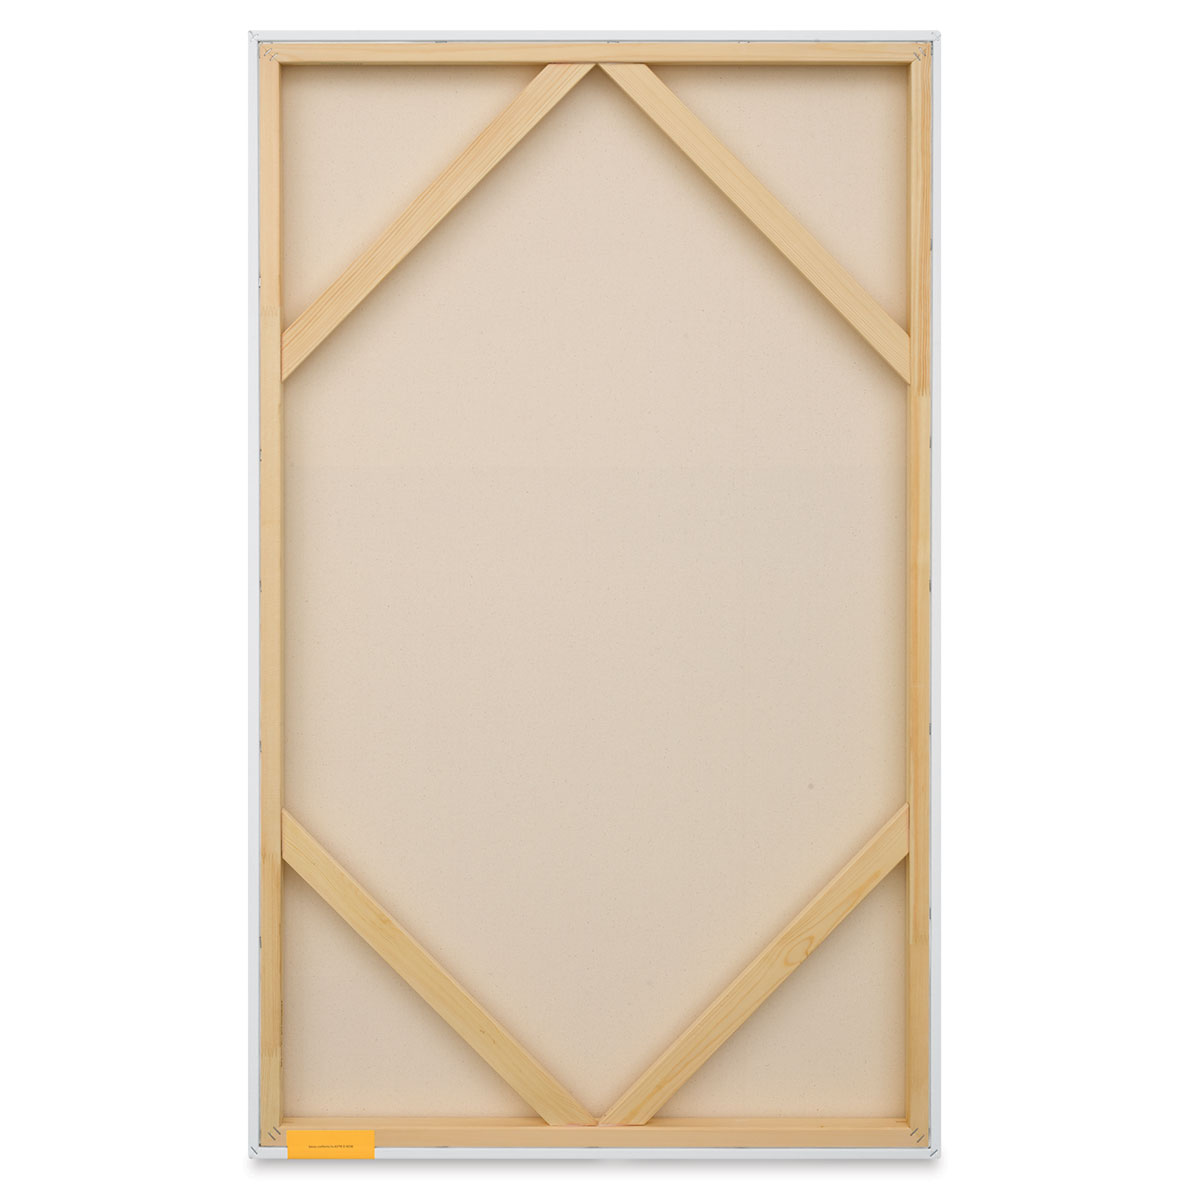 Blick Premier Stretched Cotton Canvas - Gallery Profile, Splined, 40 x 60, Pkg of 3